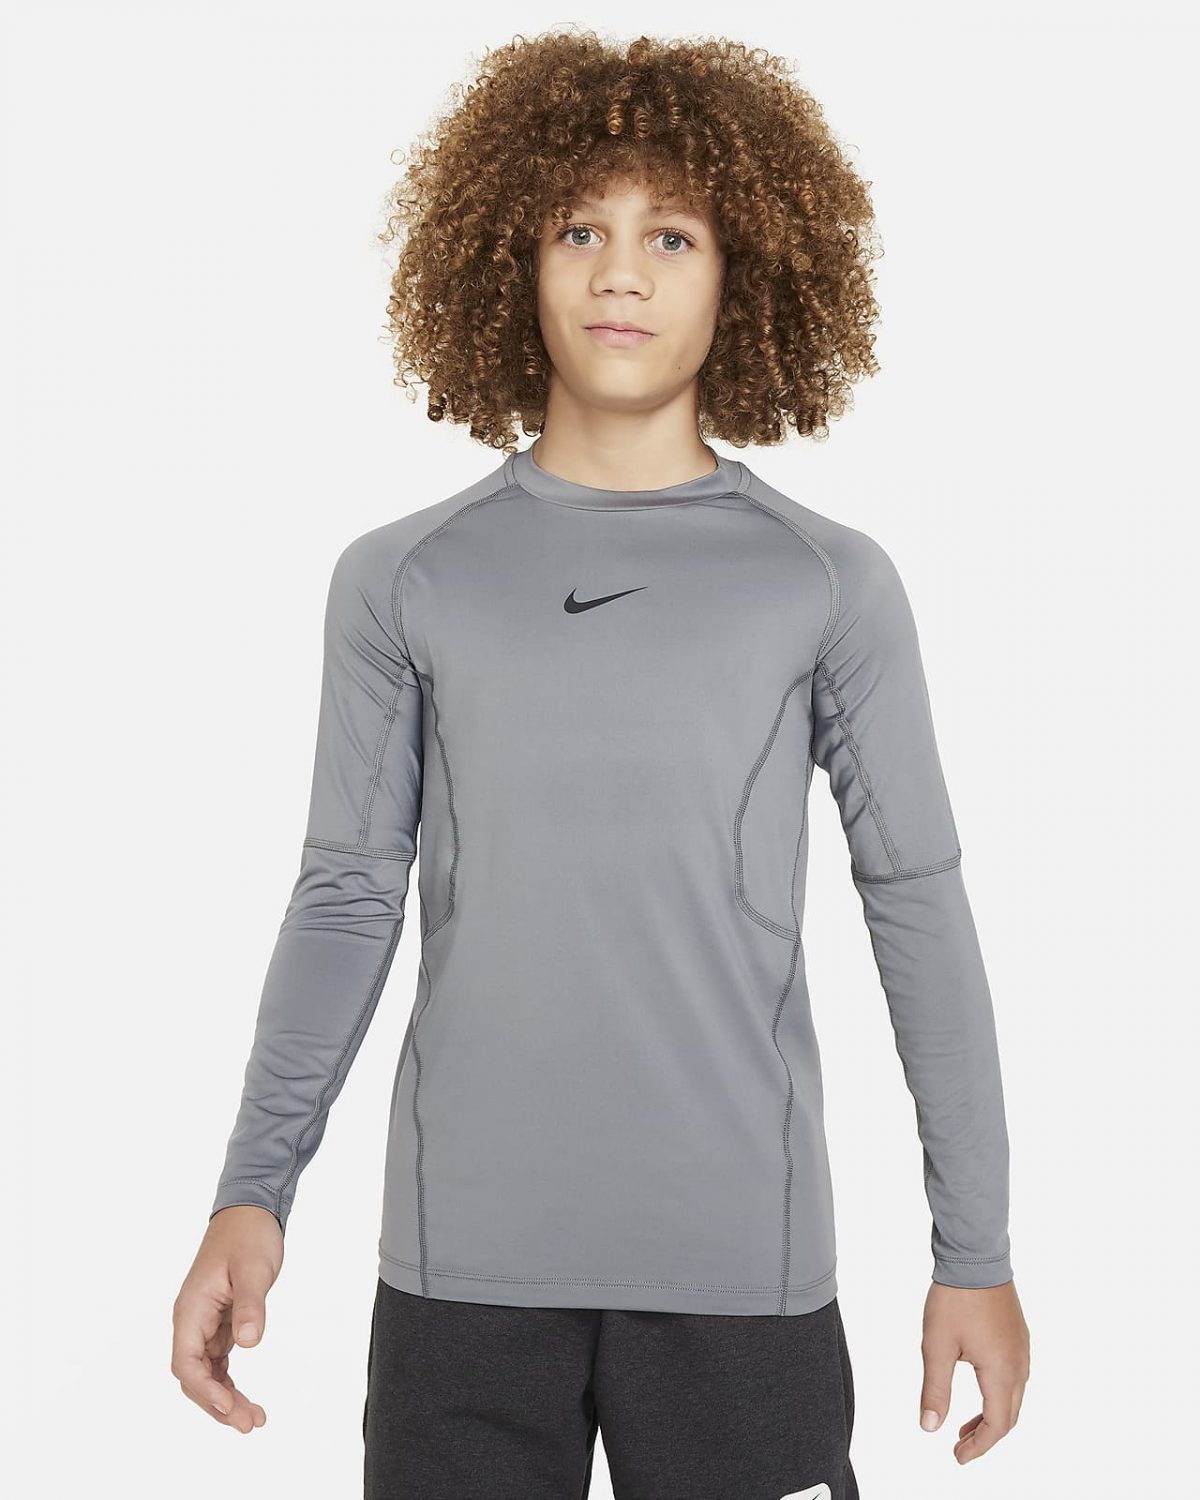 Детский топ Nike Pro фото